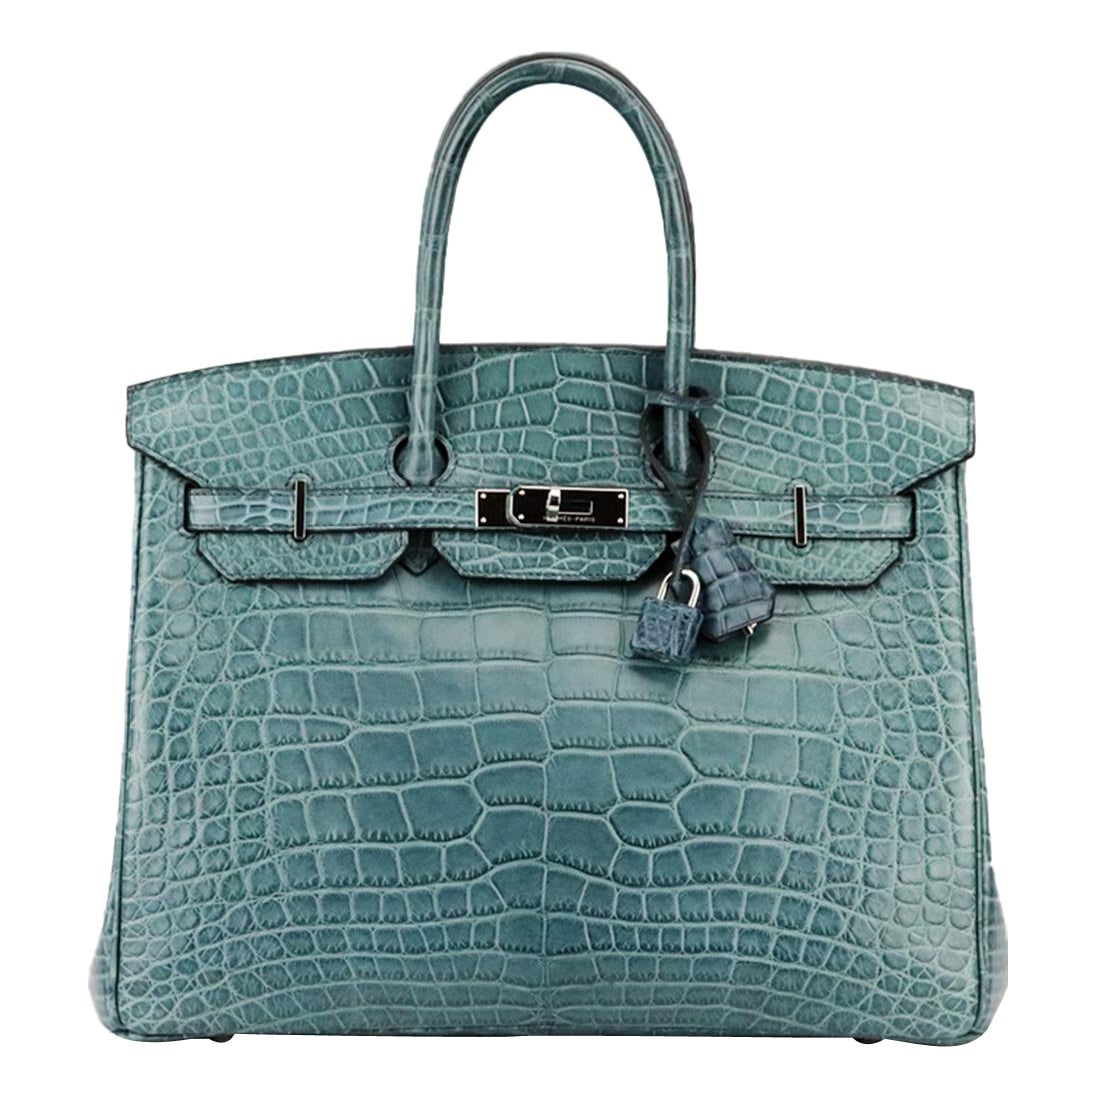 Hermès 2013 Birkin 35cm Matte Alligator Mississippiensis Leather Bag For Sale